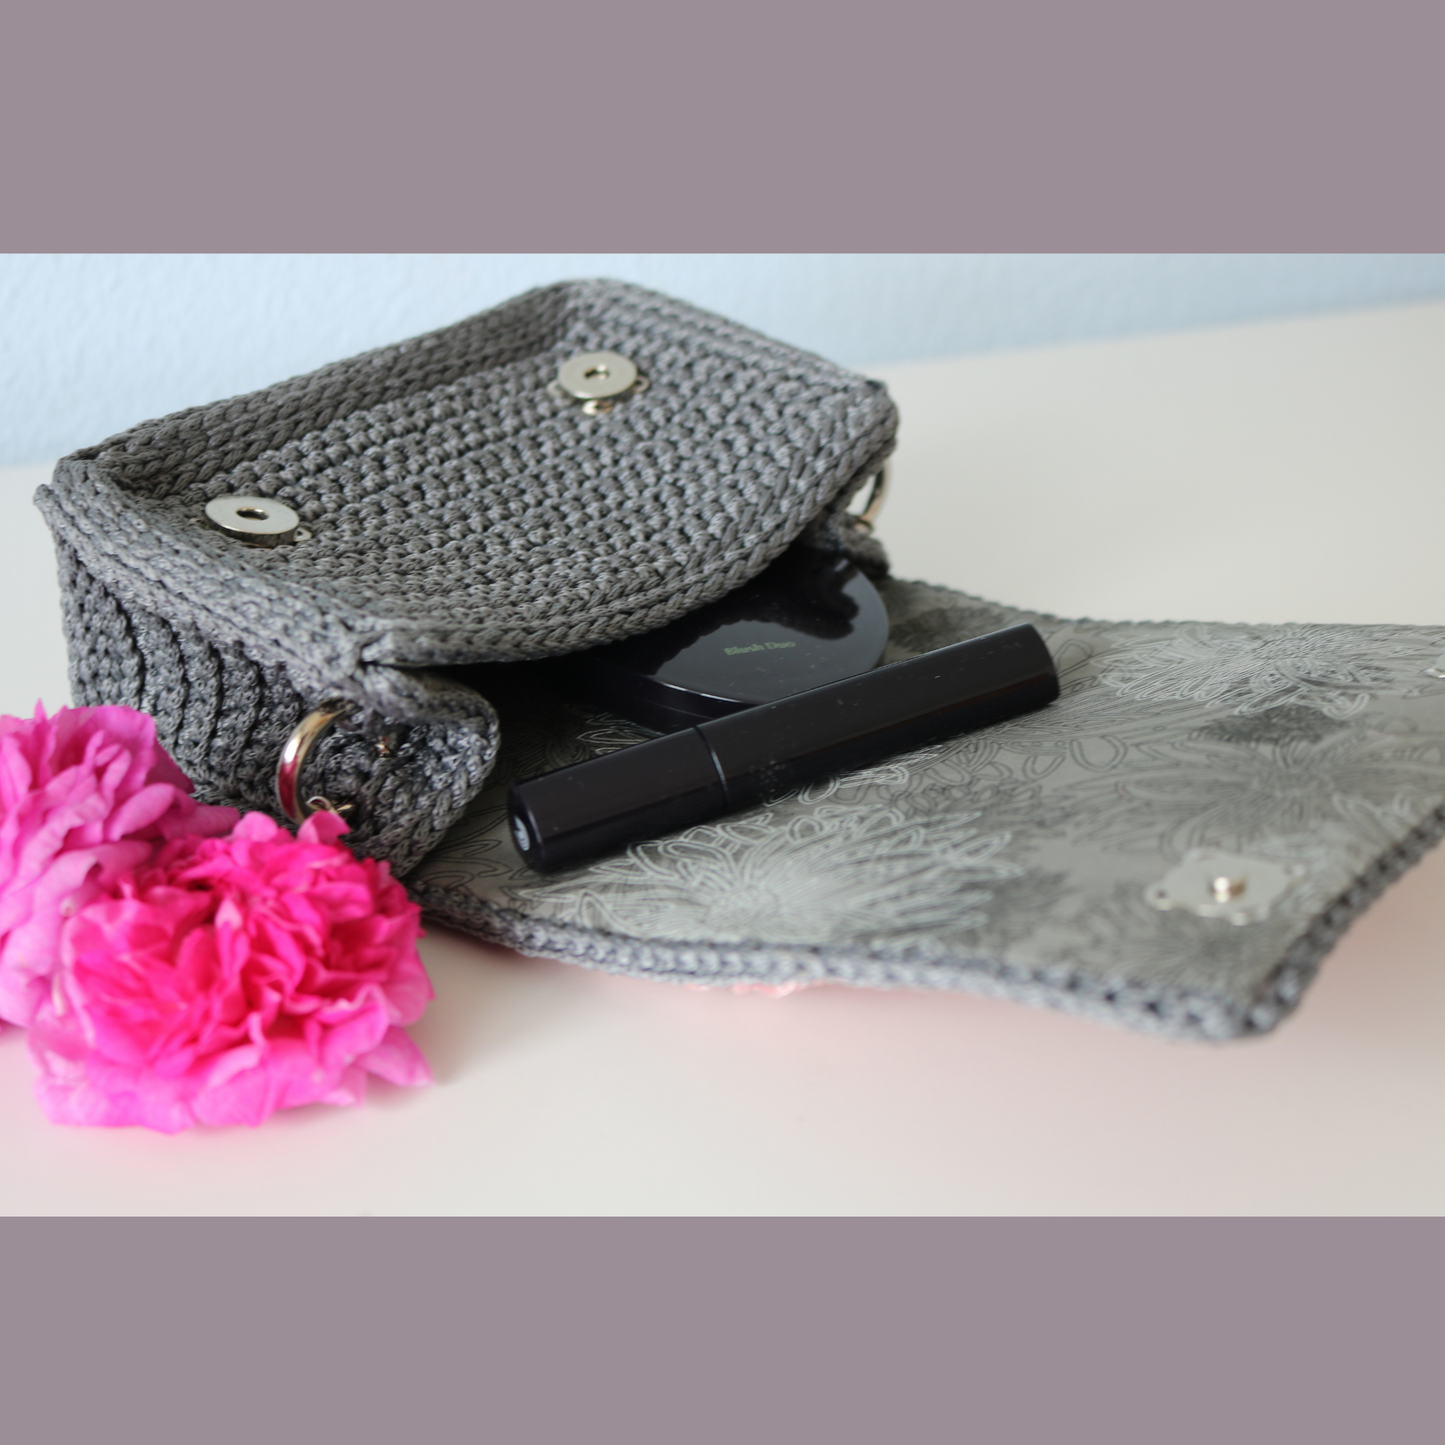 Mini soft pink colour handbag with long silver metal chain